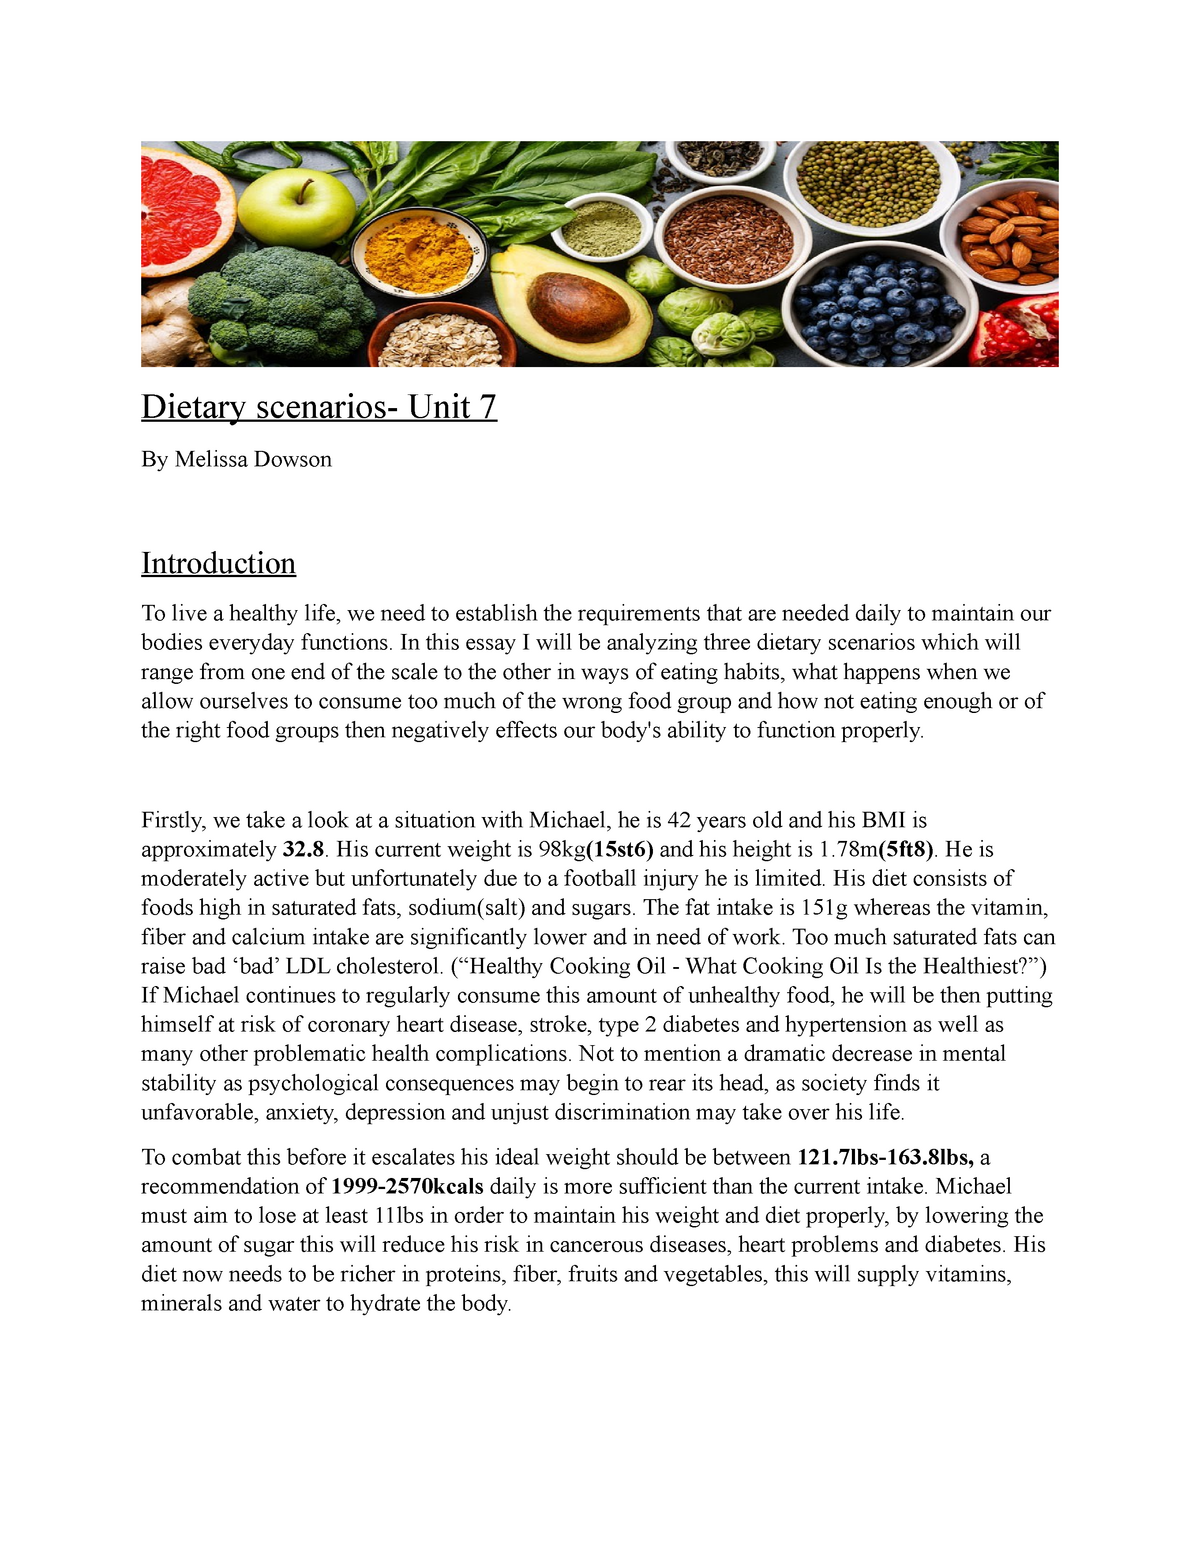 healthy diet summary essay